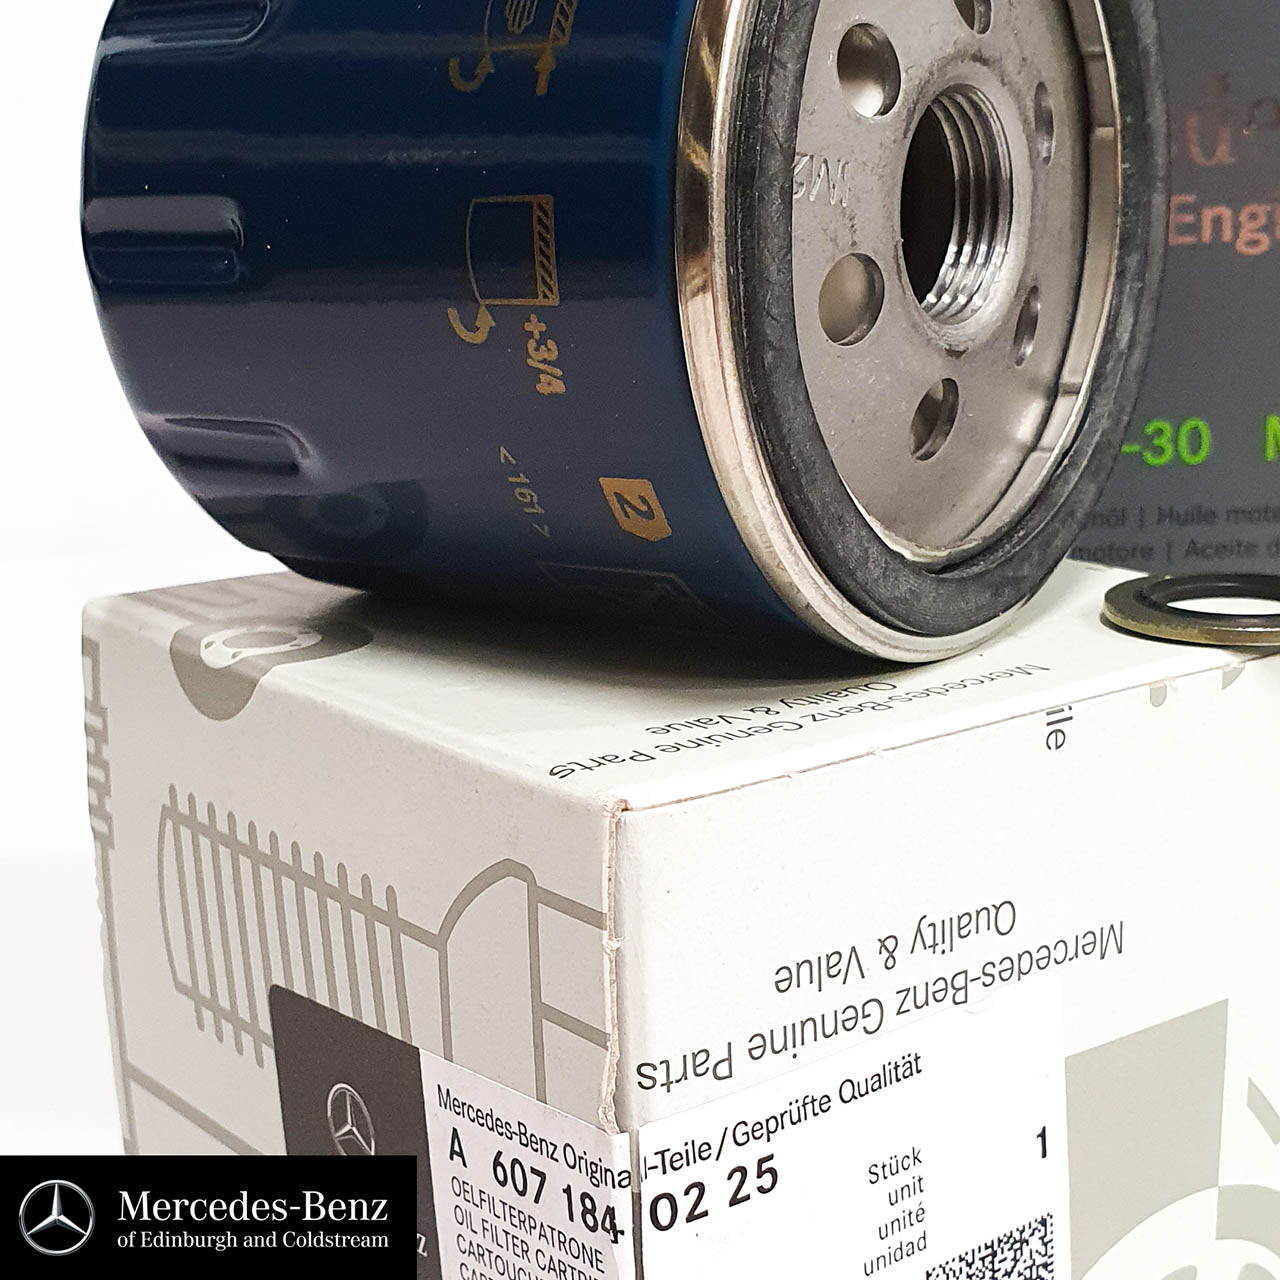 Genuine Mercedes-Benz service kit CDI diesel OM607 engine - oil and filter